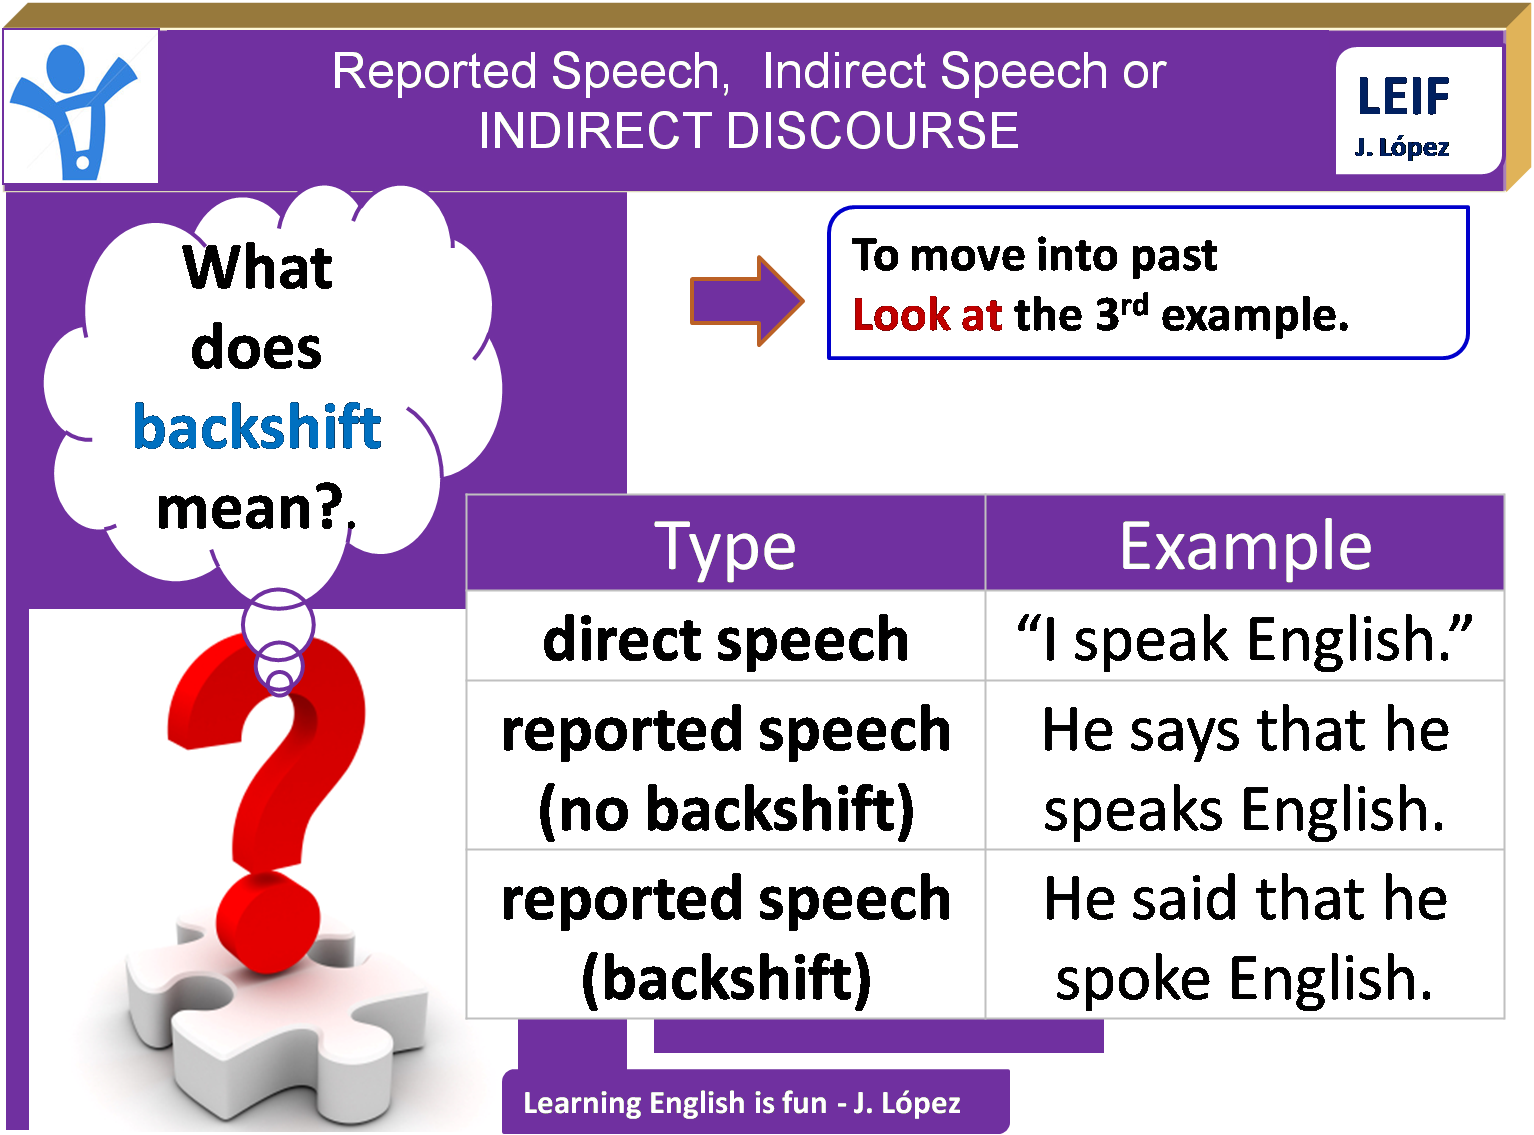 Example of 3 minutes speech